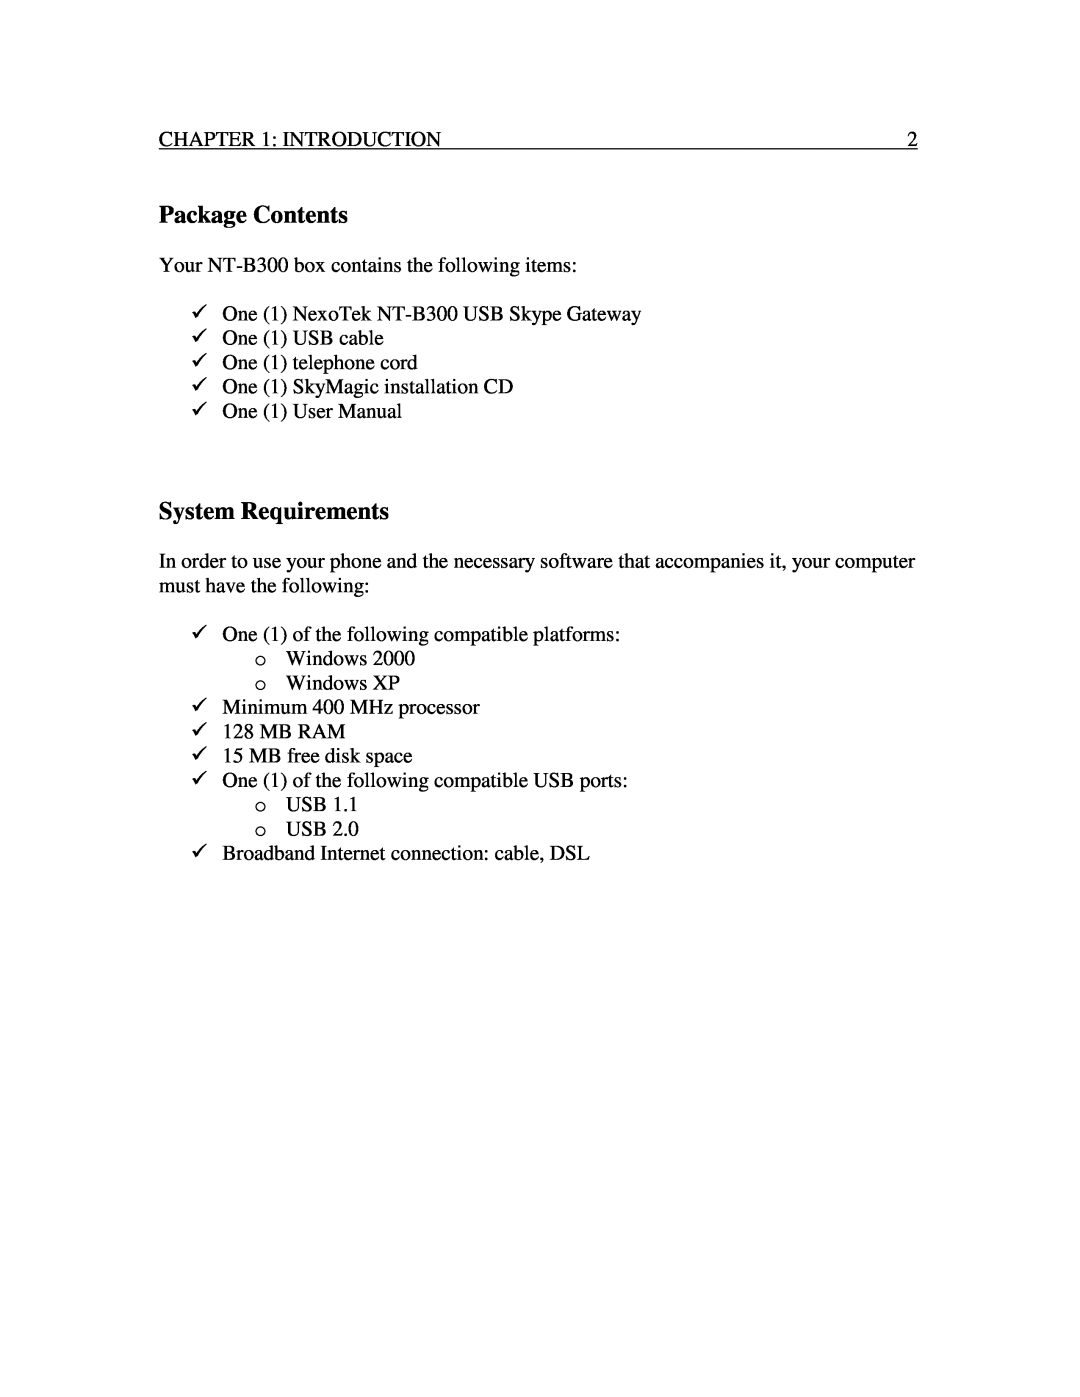 Nexotek NT-B300 manual PackageContents, SystemRequirements 